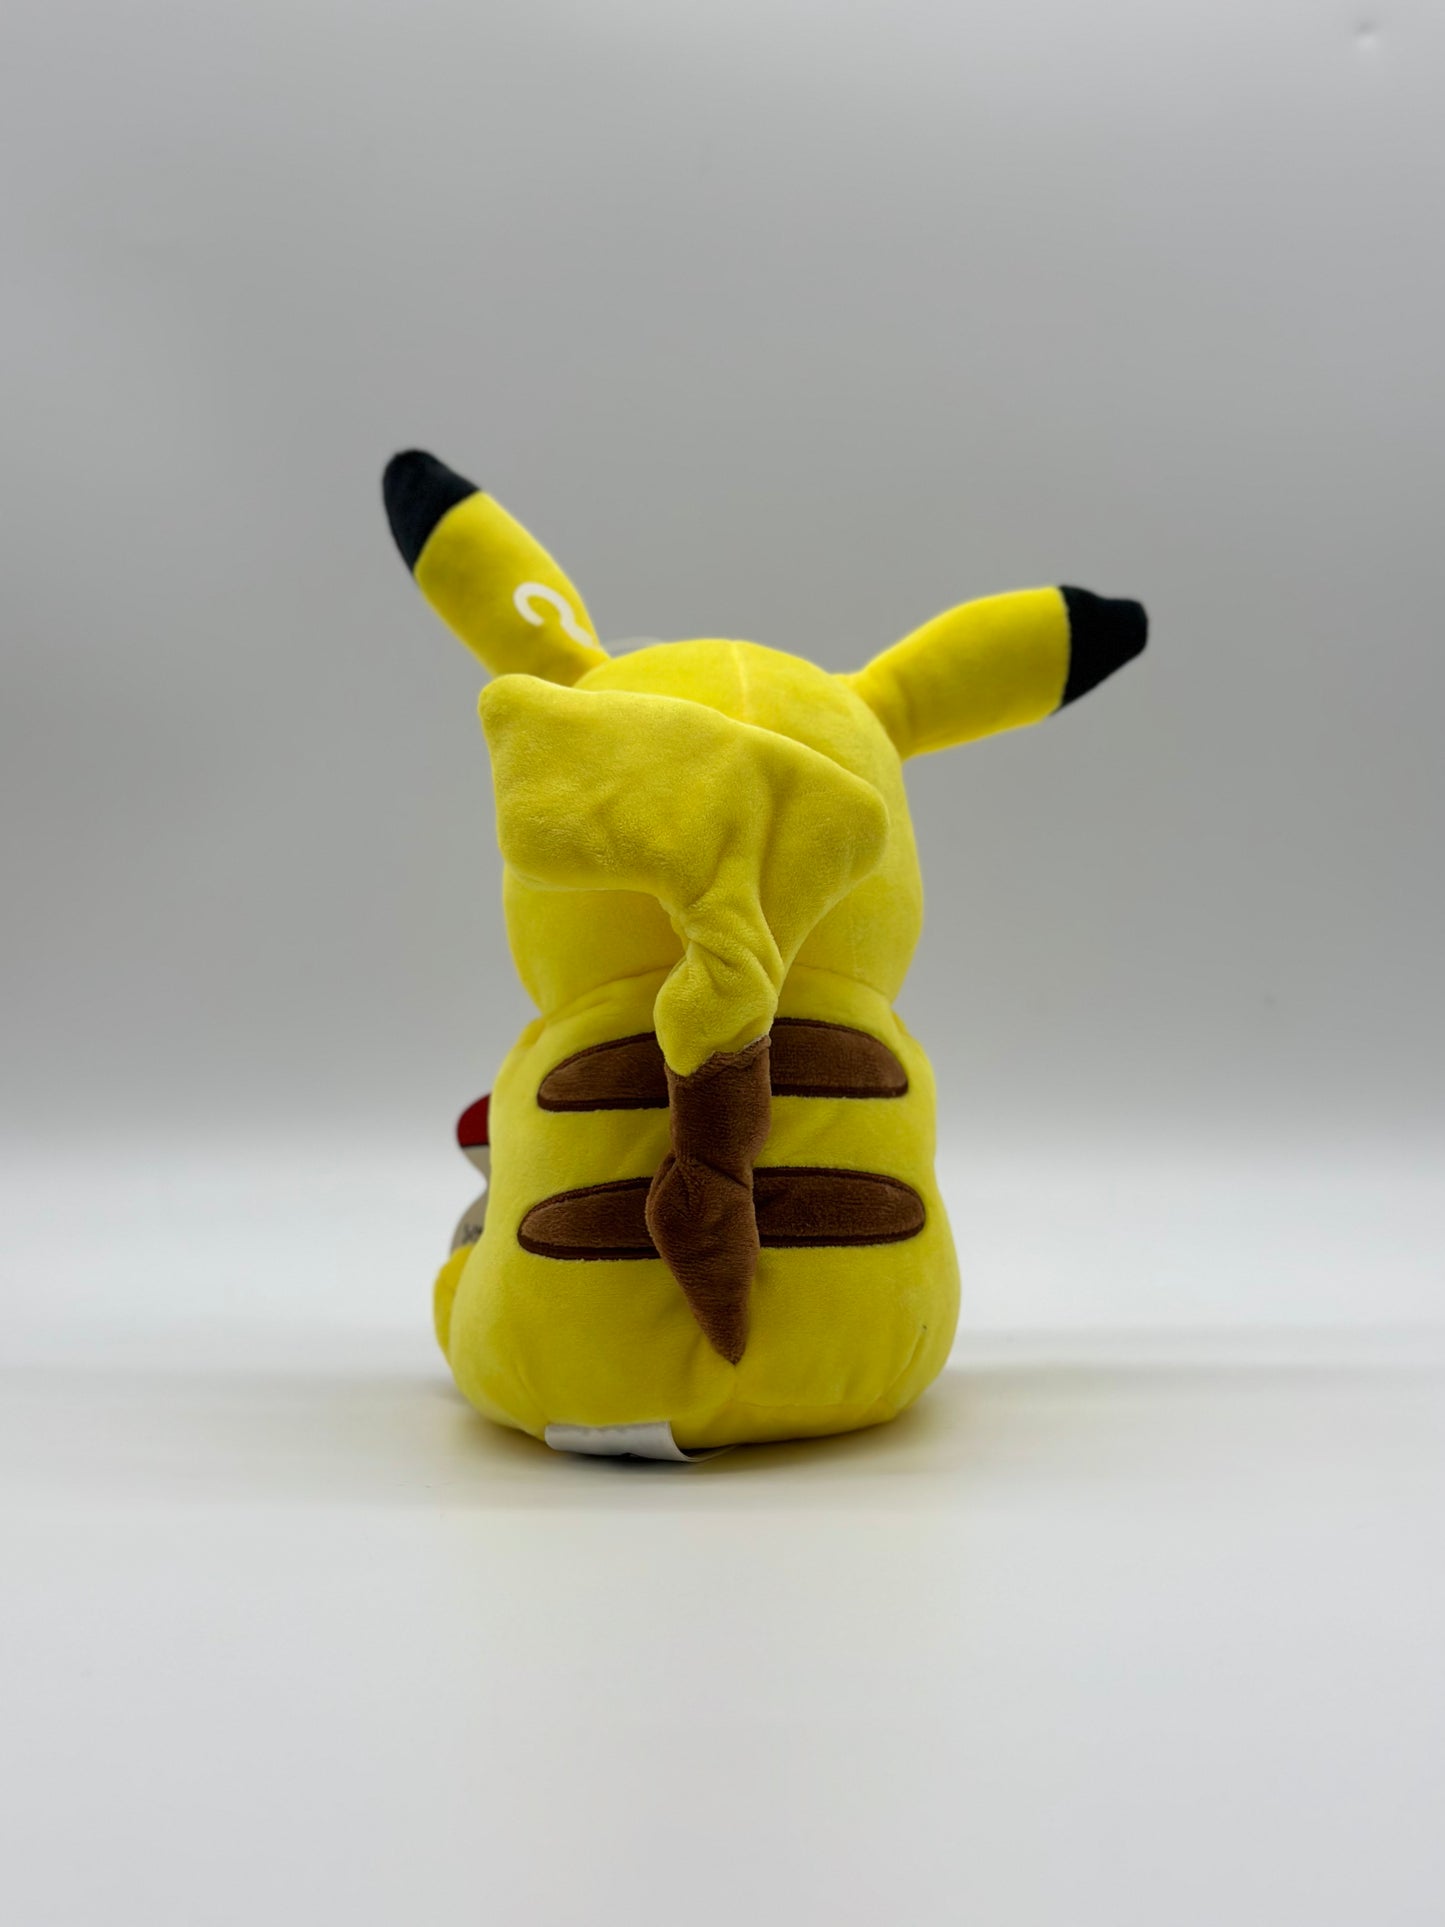 Pikachu Plush Medium